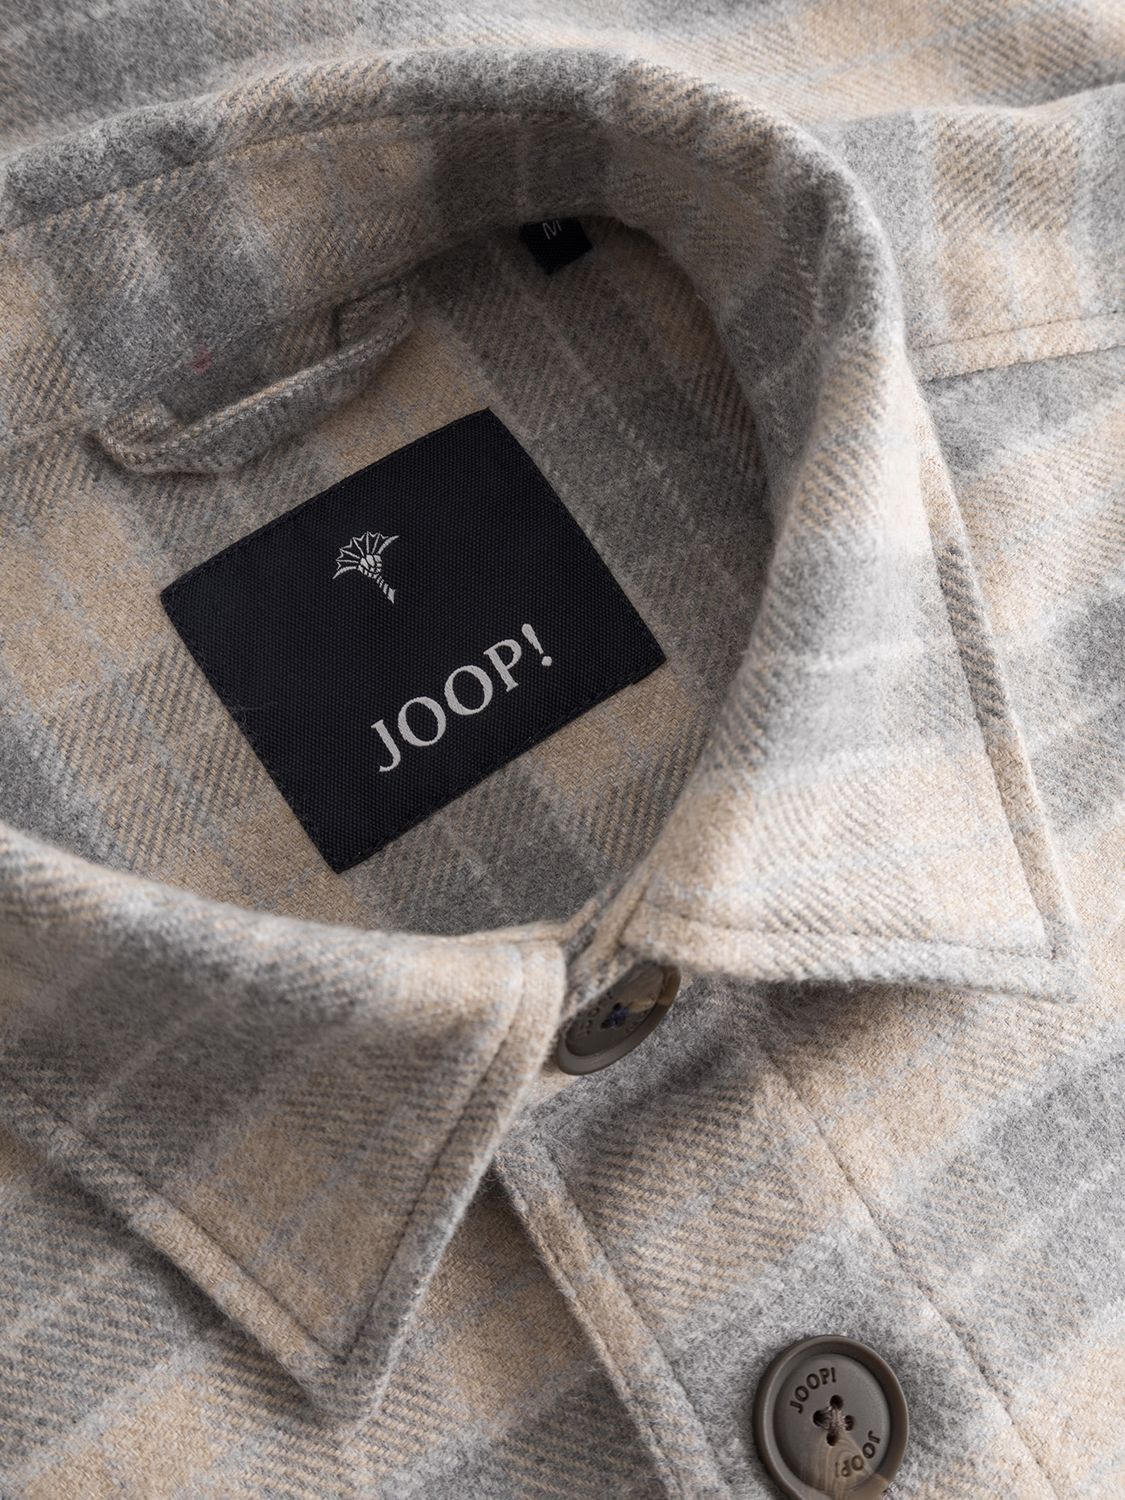 JOOP! Check Overshirt, Medium Grey, L